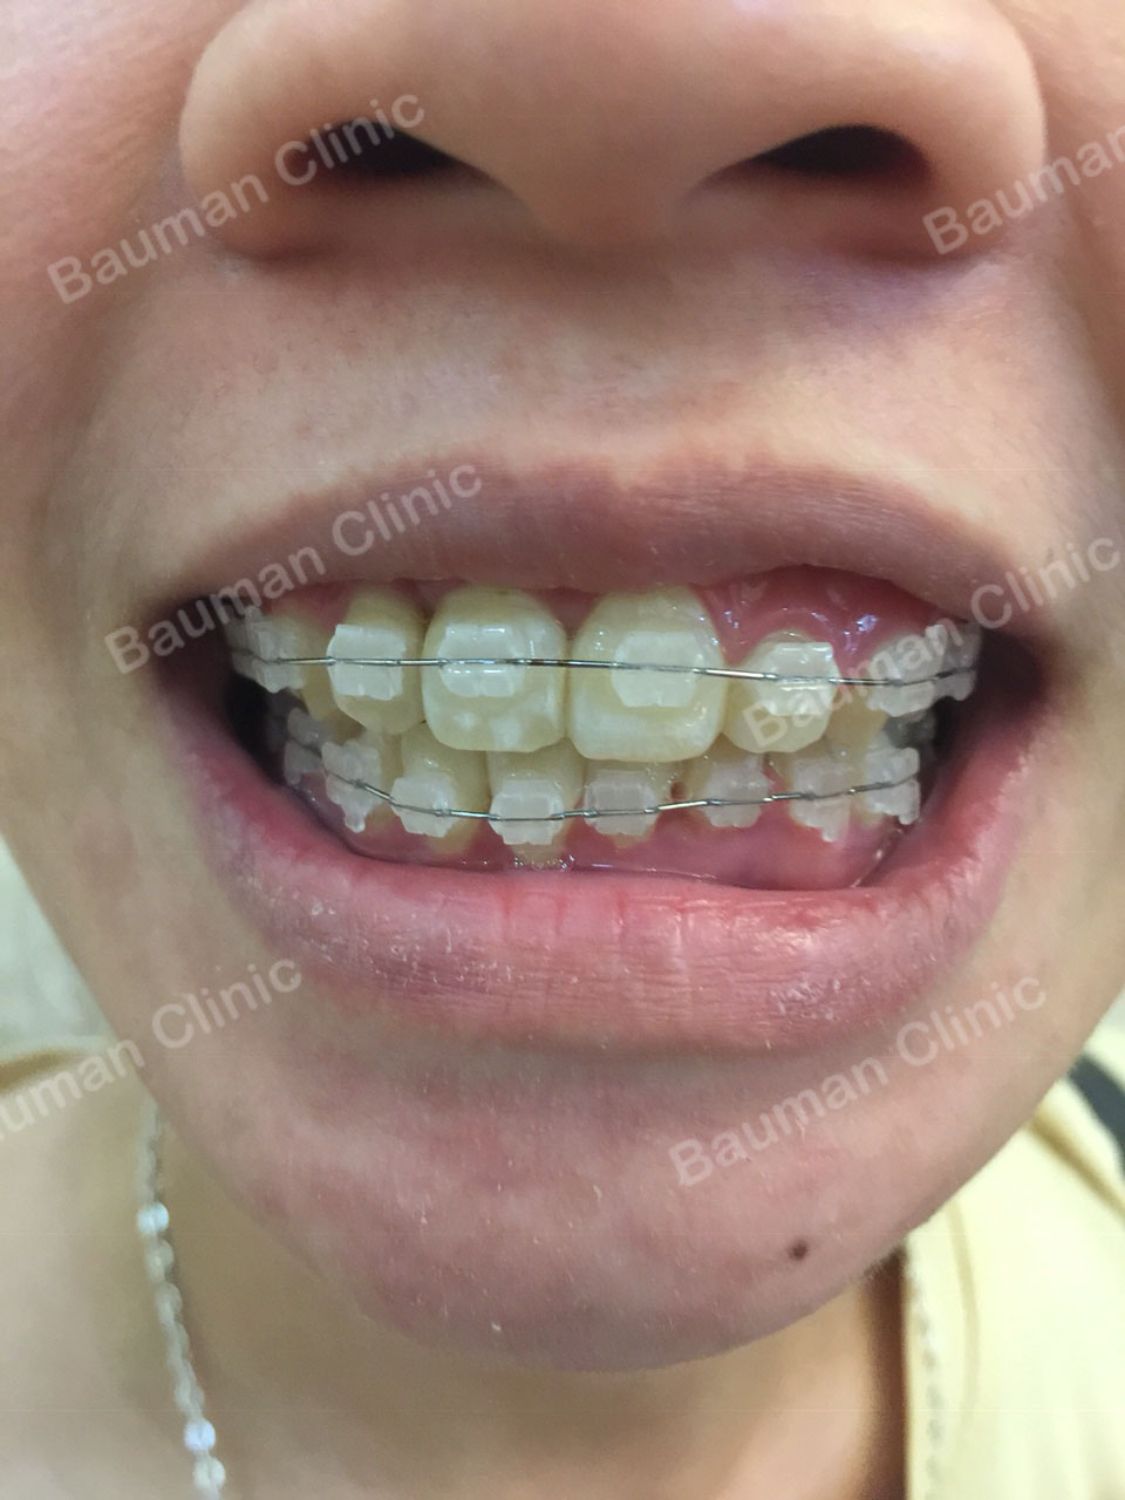 Ca niềng răng số 5075 - Nha khoa Bauman Clinic